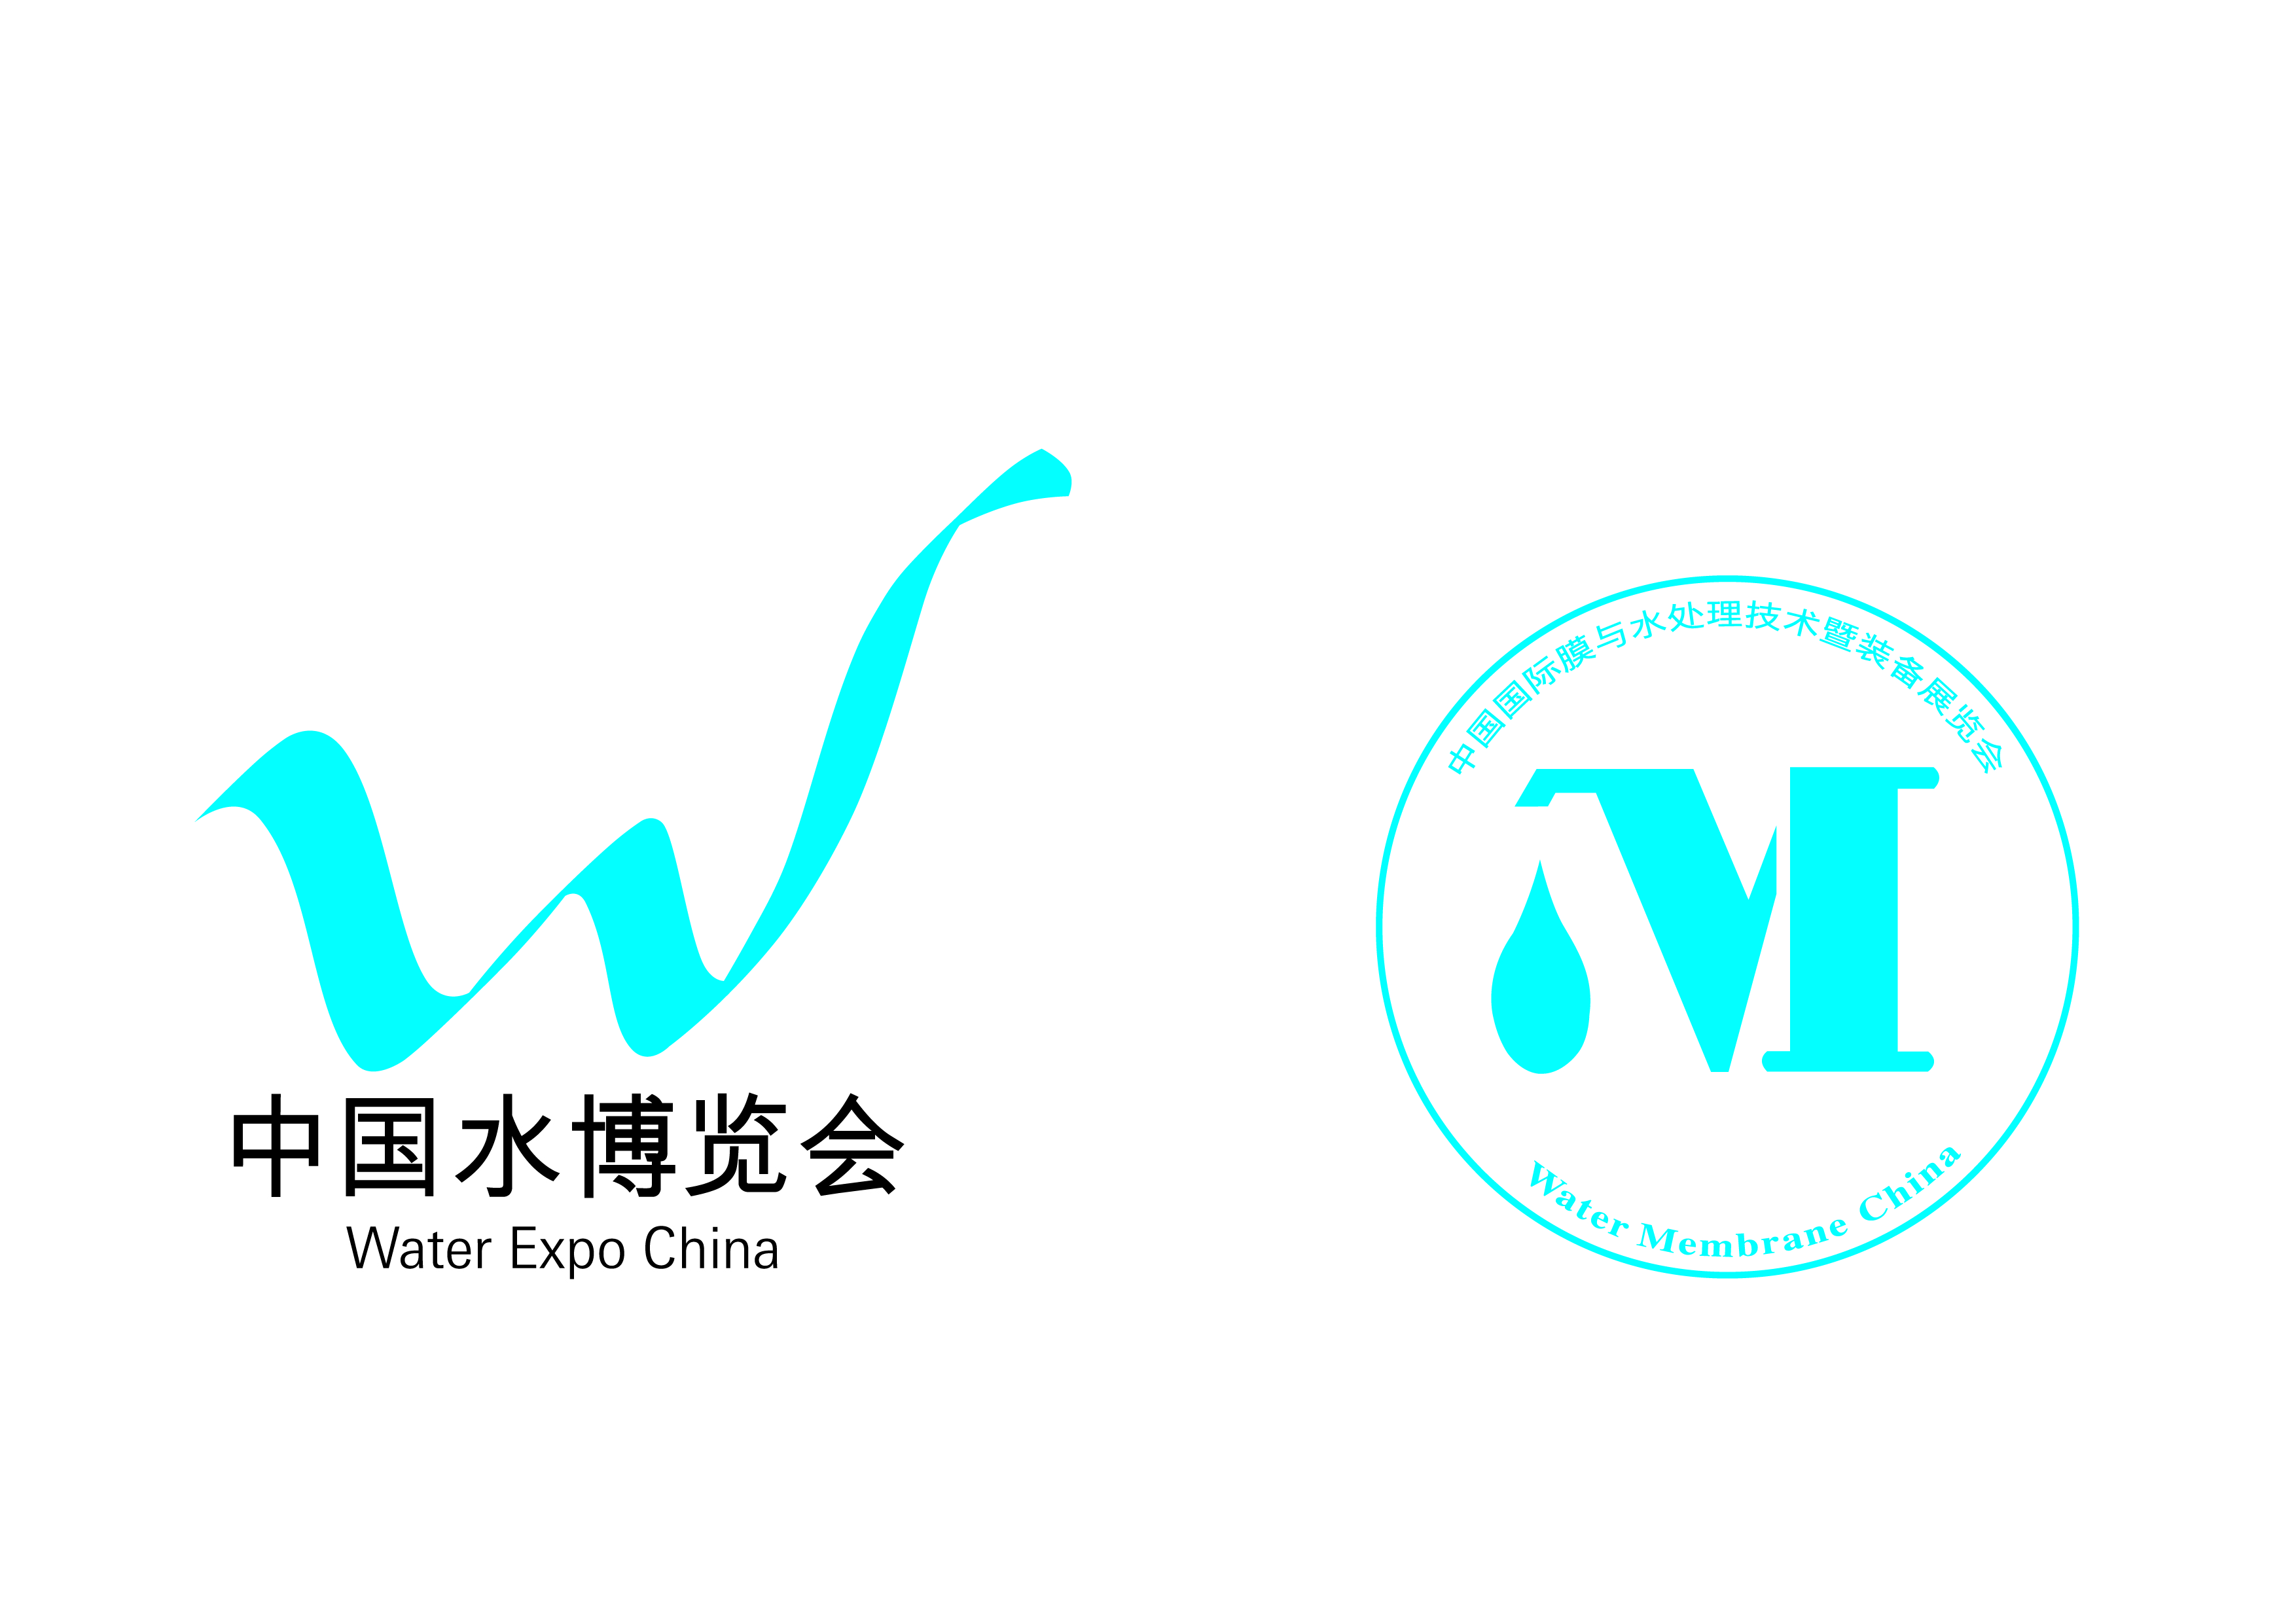 Water Expo China + Water Membrane China